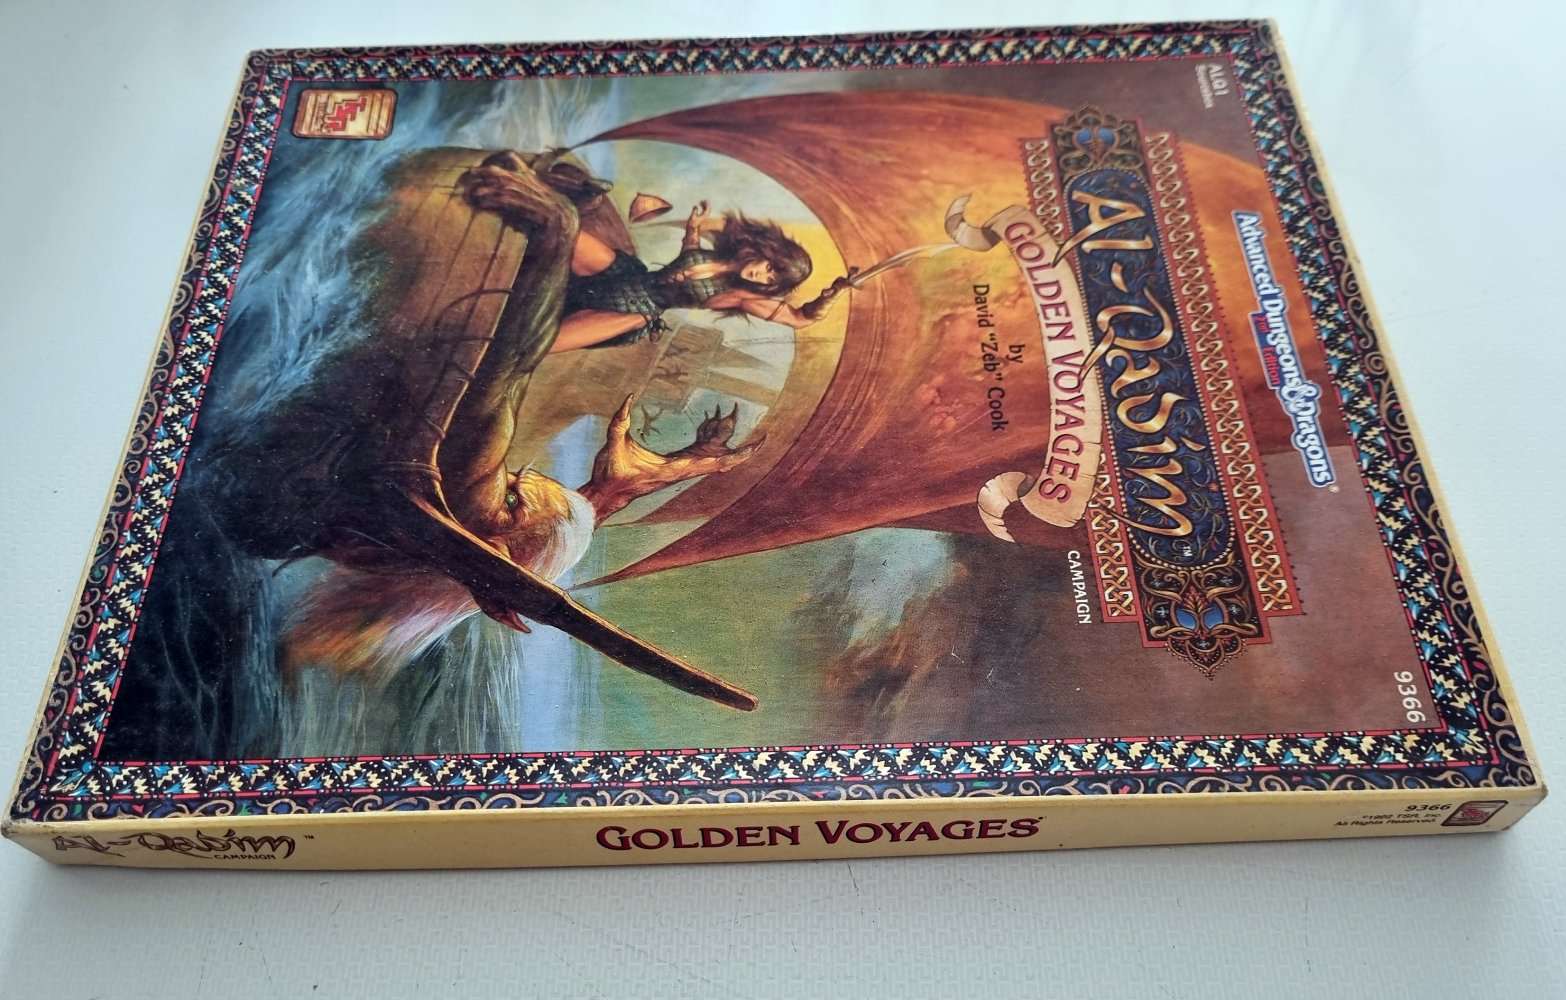 Advanced Dungeons and Dragons: Al-Qadim: Golden Voyages